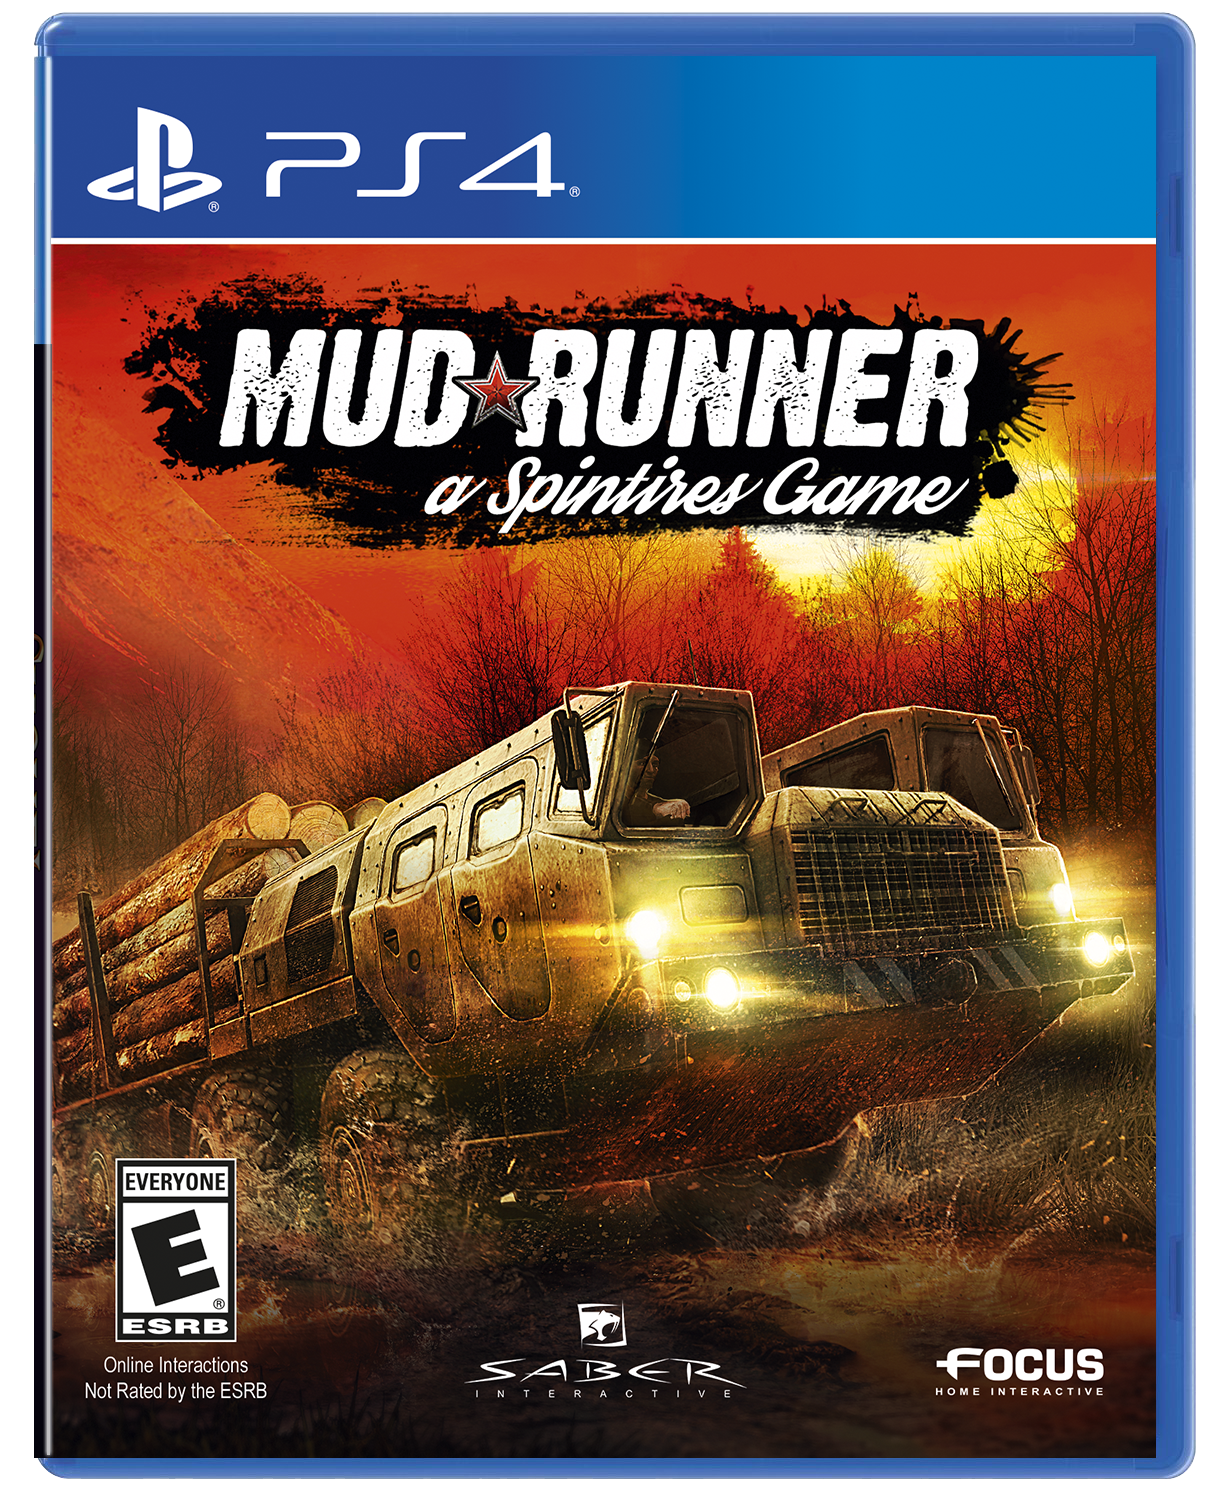 MudRunner - Xbox One